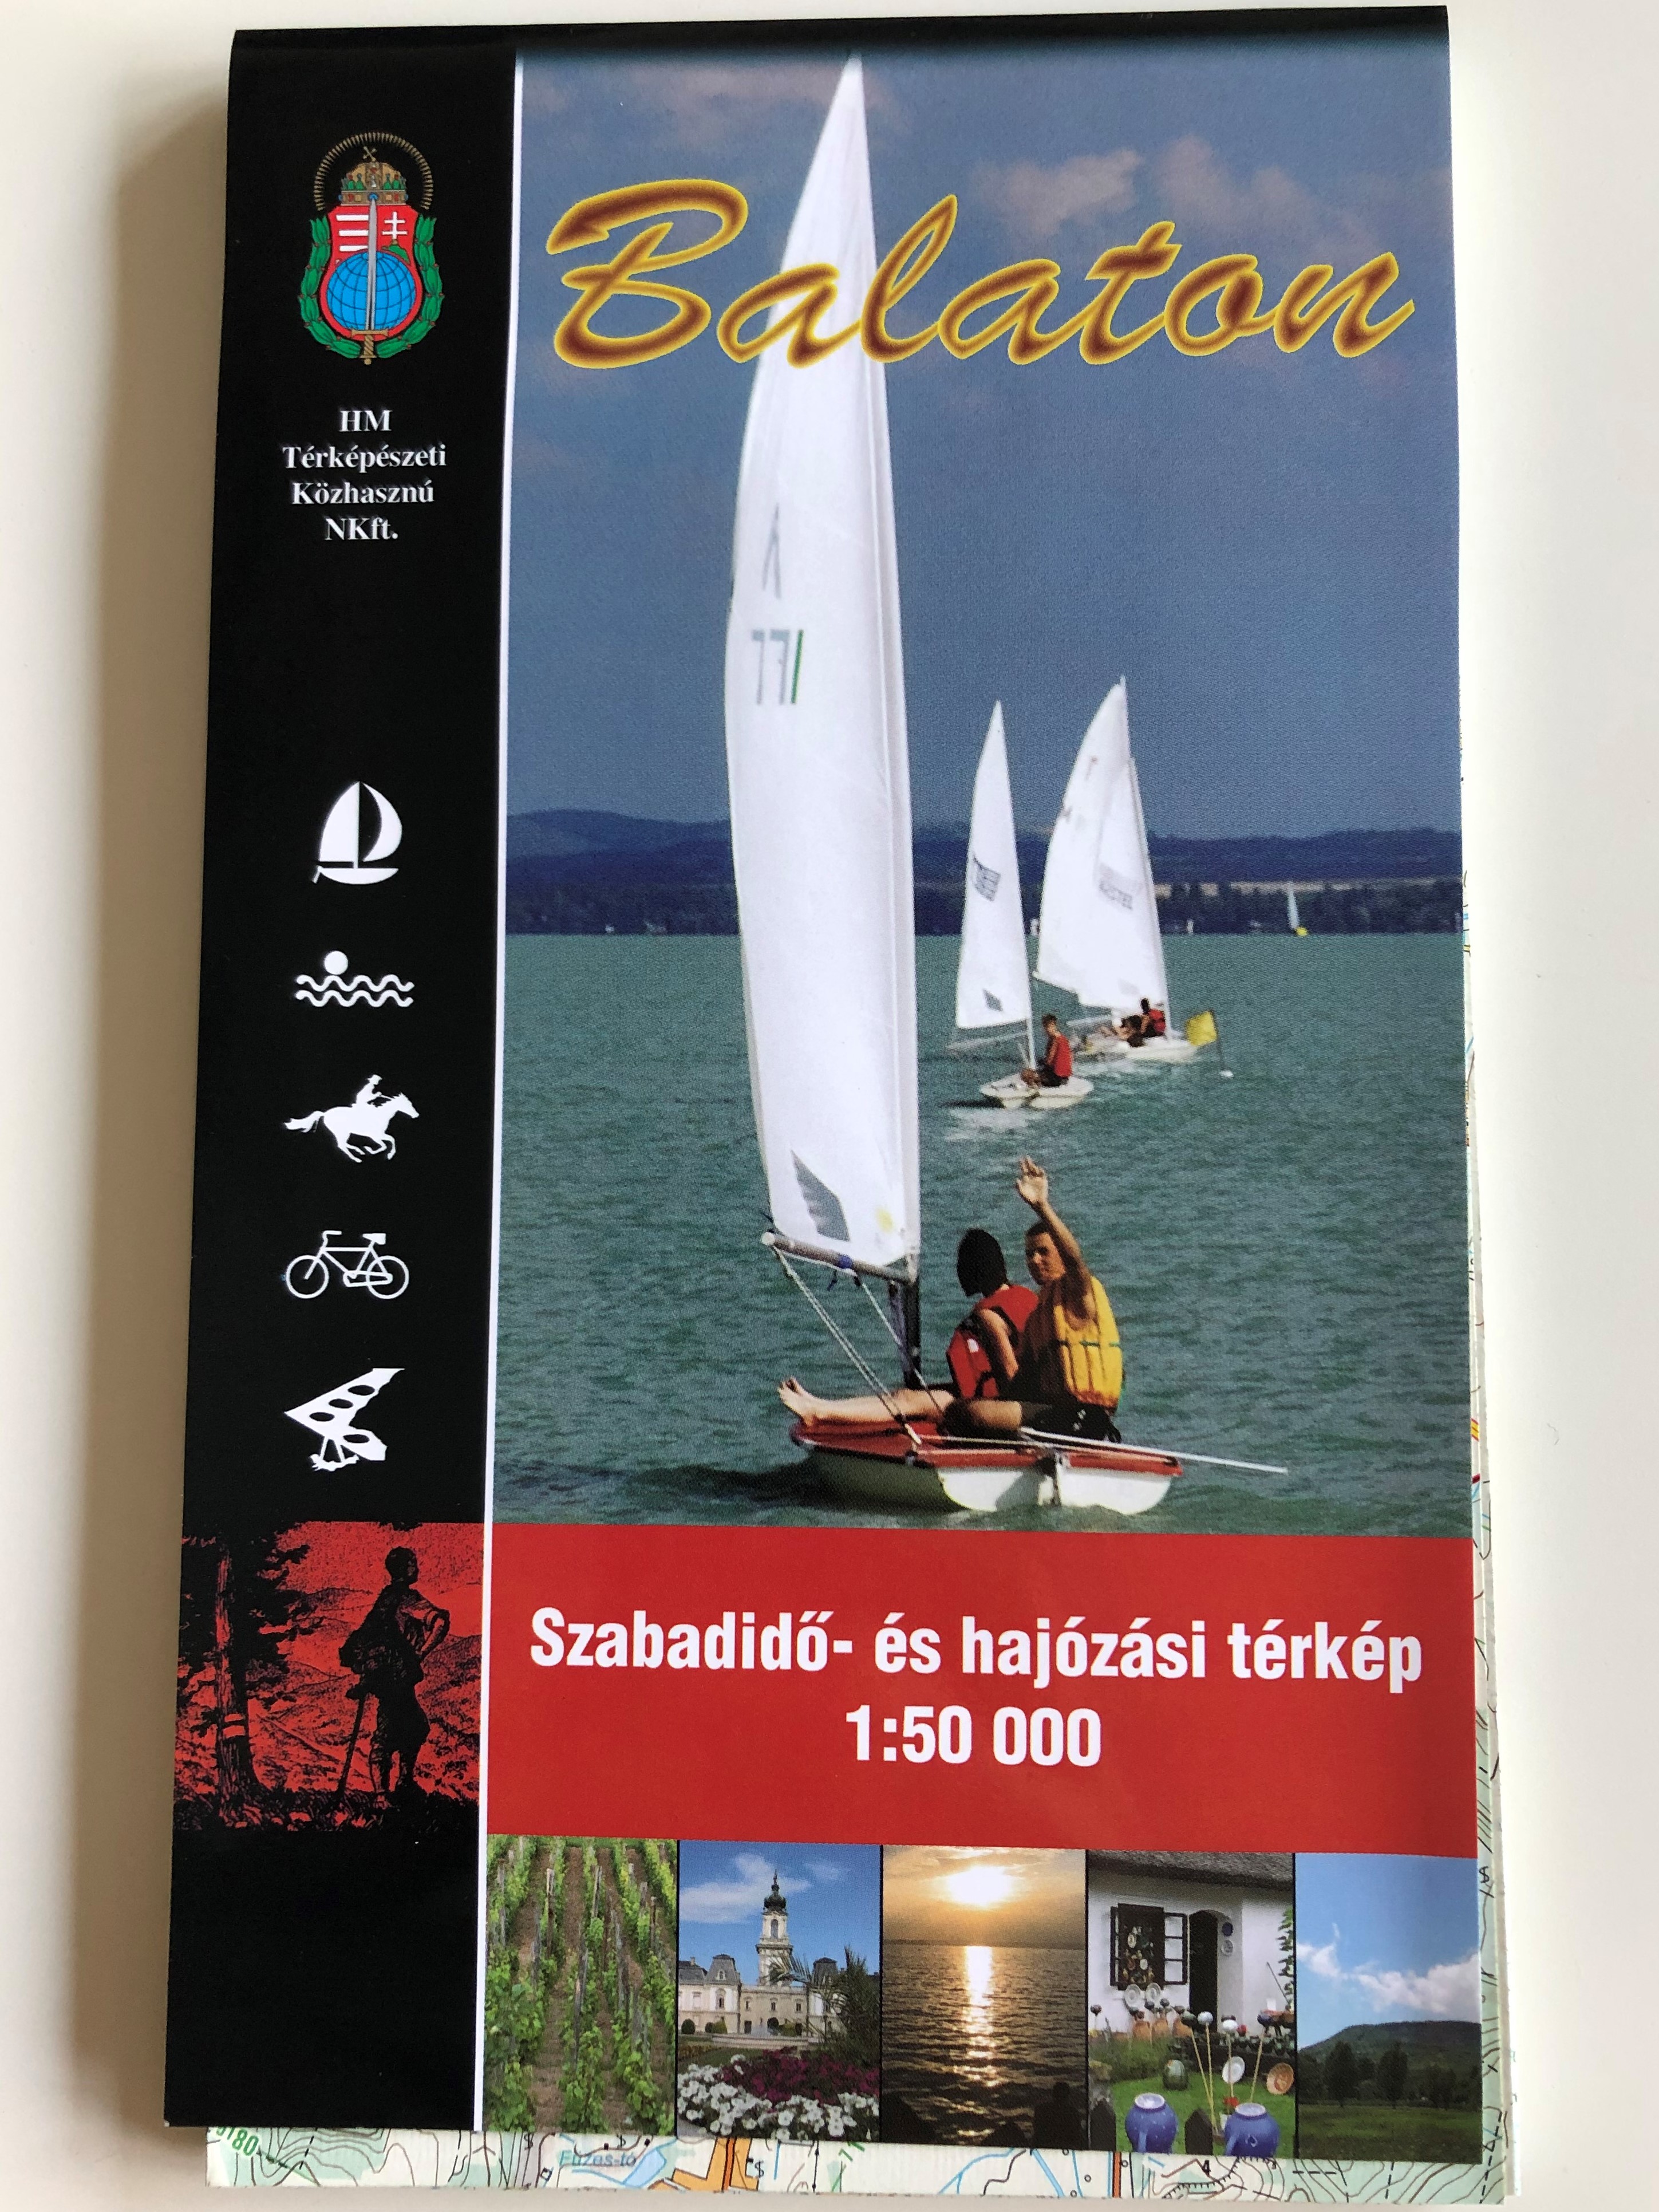 balaton-szabadid-s-haj-z-si-t-rk-p-1-50.000-free-time-and-sailing-map-of-the-balaton-lake-region-hungarian-english-and-german-legend-1-.jpg